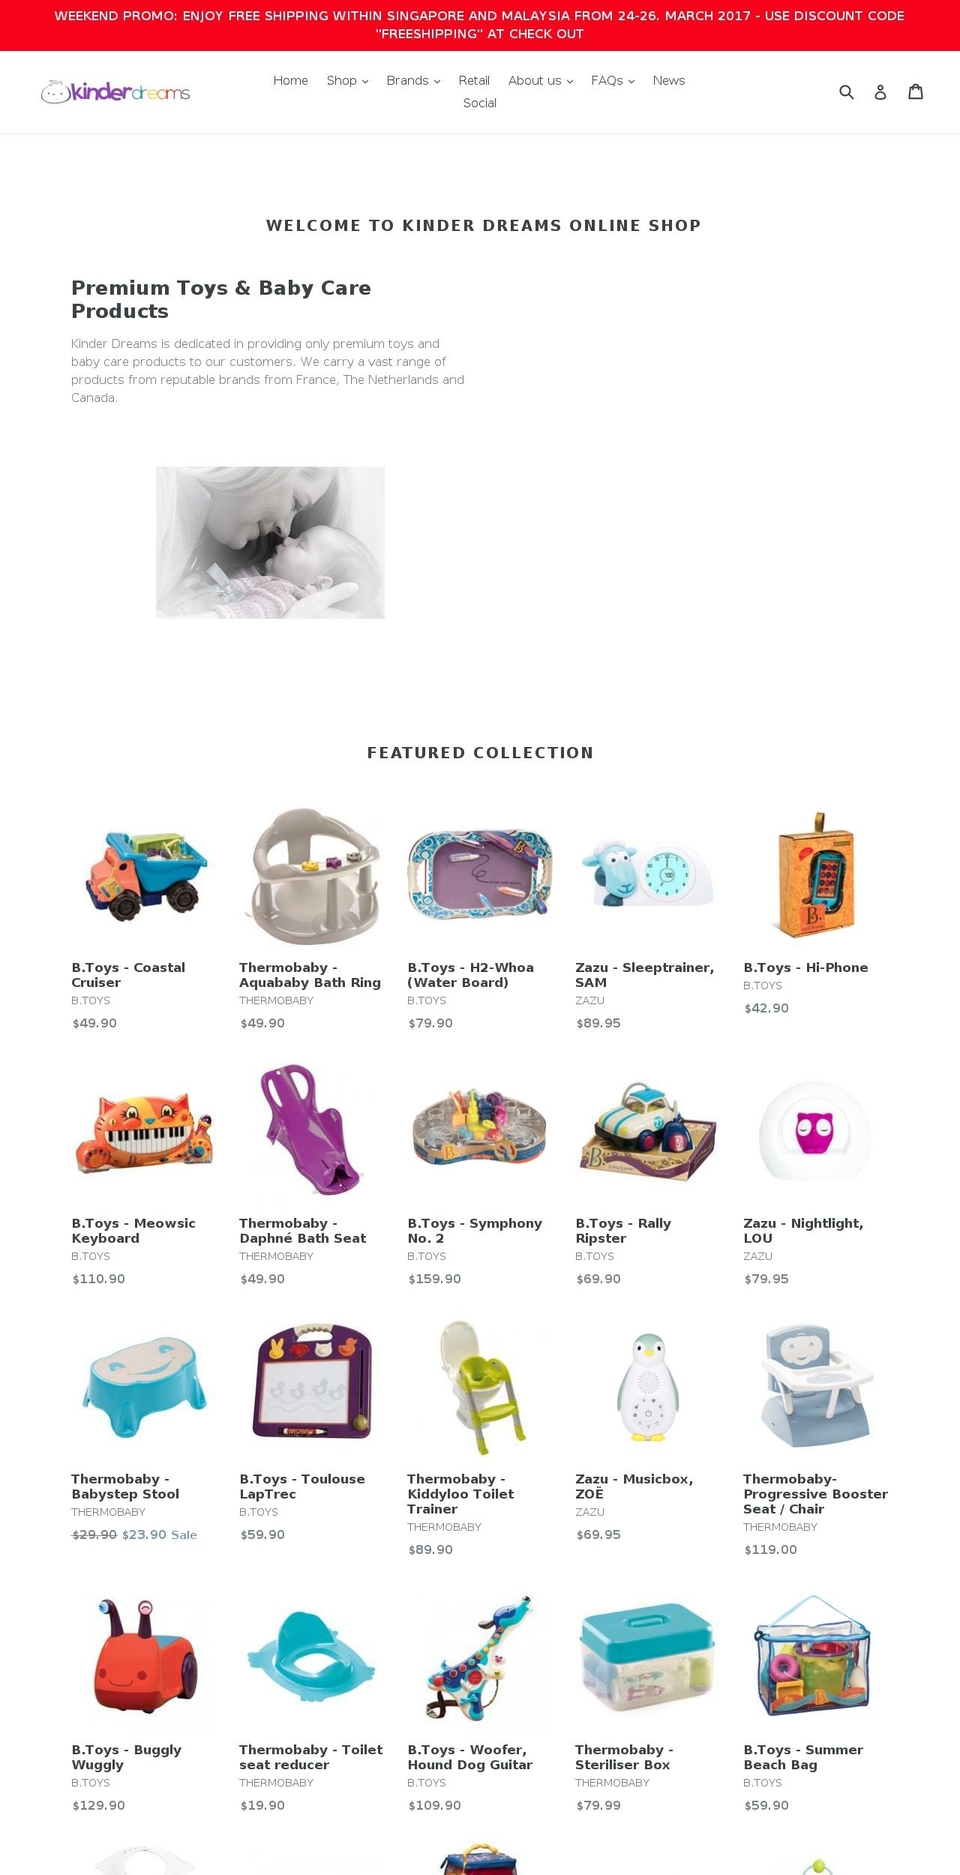 kinderdreams.com.sg shopify website screenshot